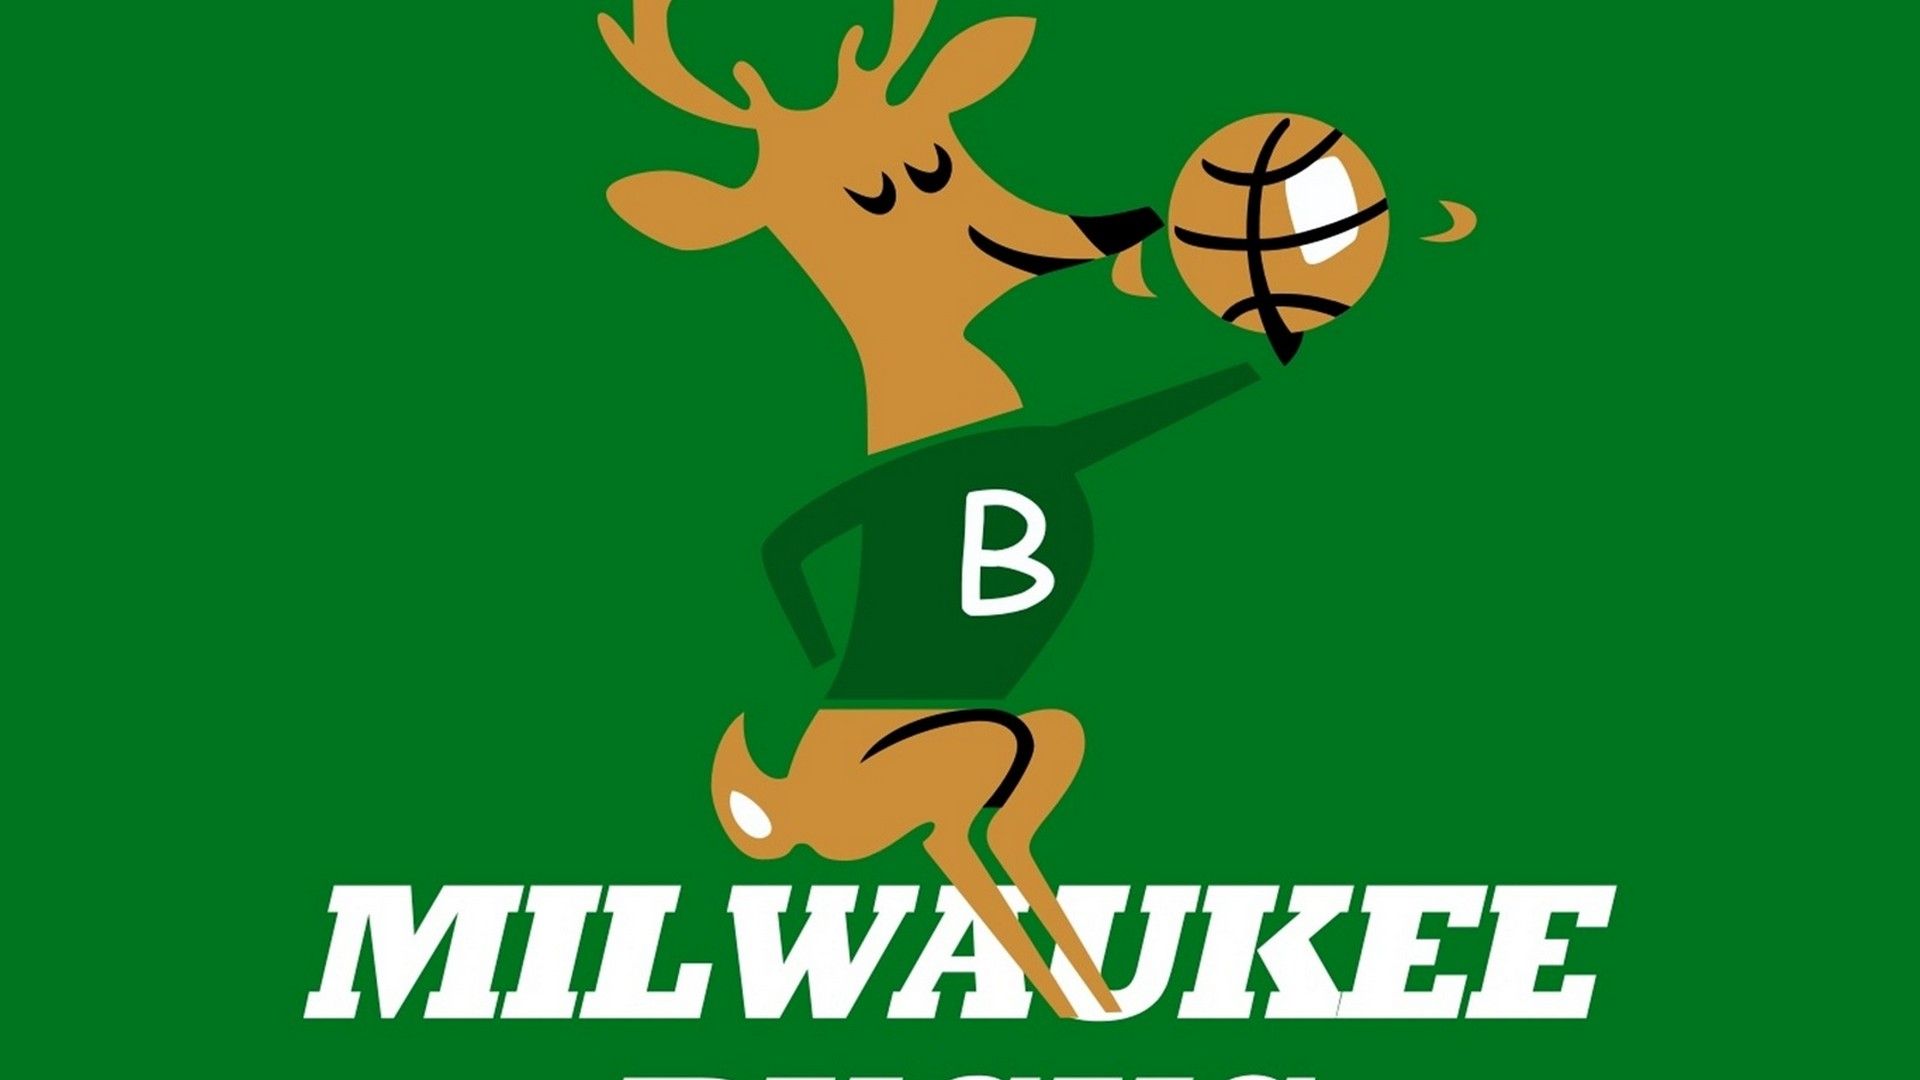 Milwaukee Bucks Wallpaper For Mac Background Basketball Wallpaper. Milwaukee bucks, Basketball wallpaper, Basketball wallpaper hd